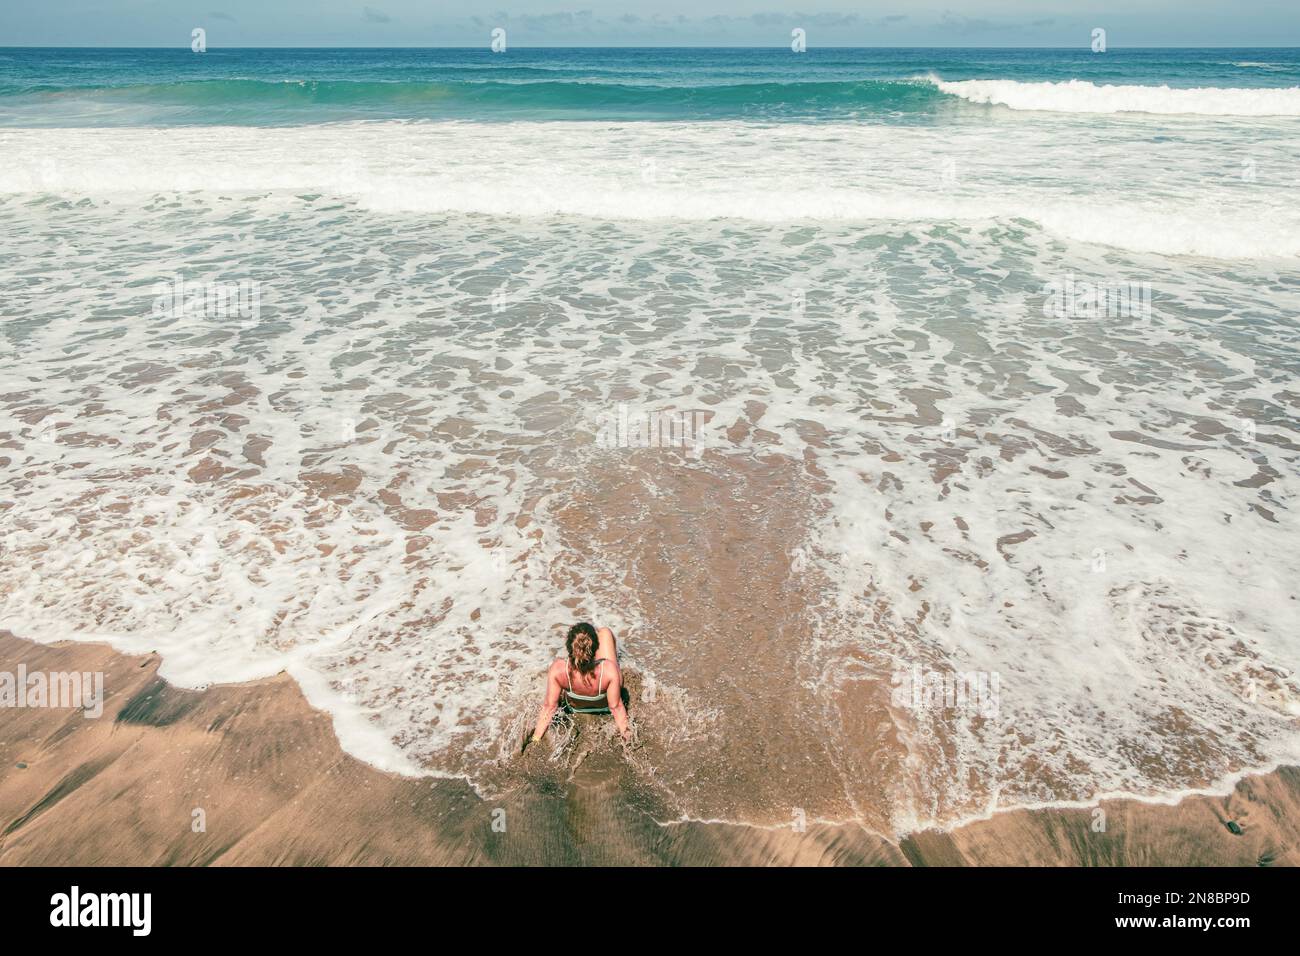 Young girl enjoying the waves on Vigocho beach, spectacular setting Stock Photo